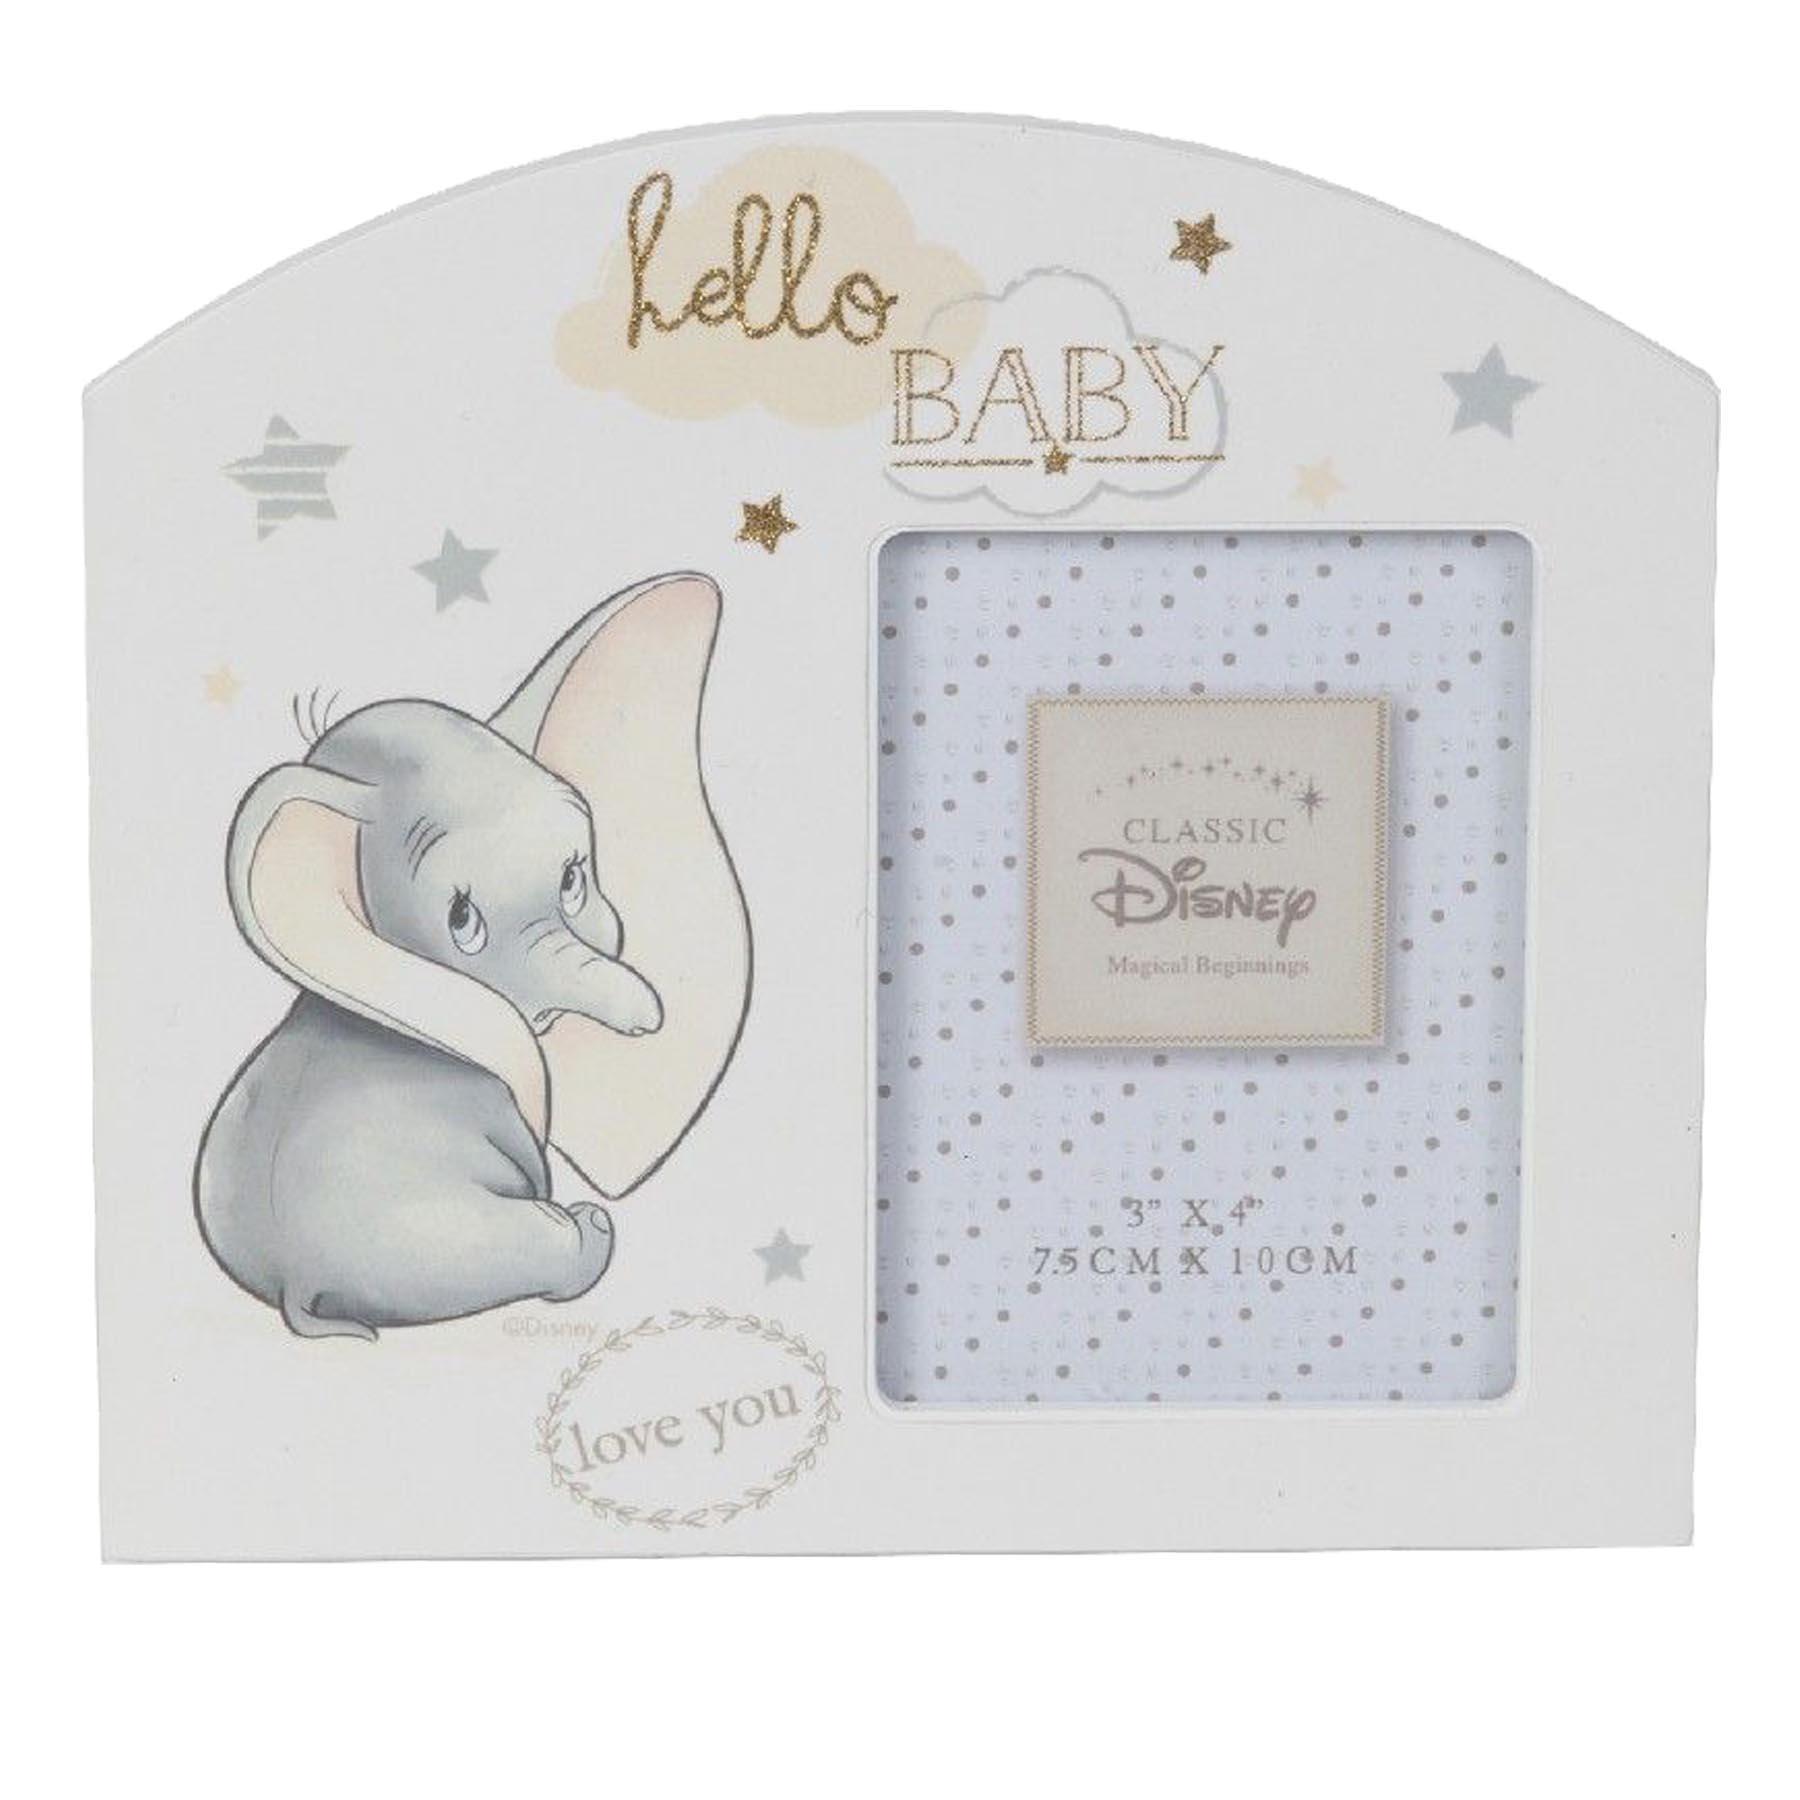 Disney Magical Beginnings Baby Photo Frame 3' x 4' Dumbo